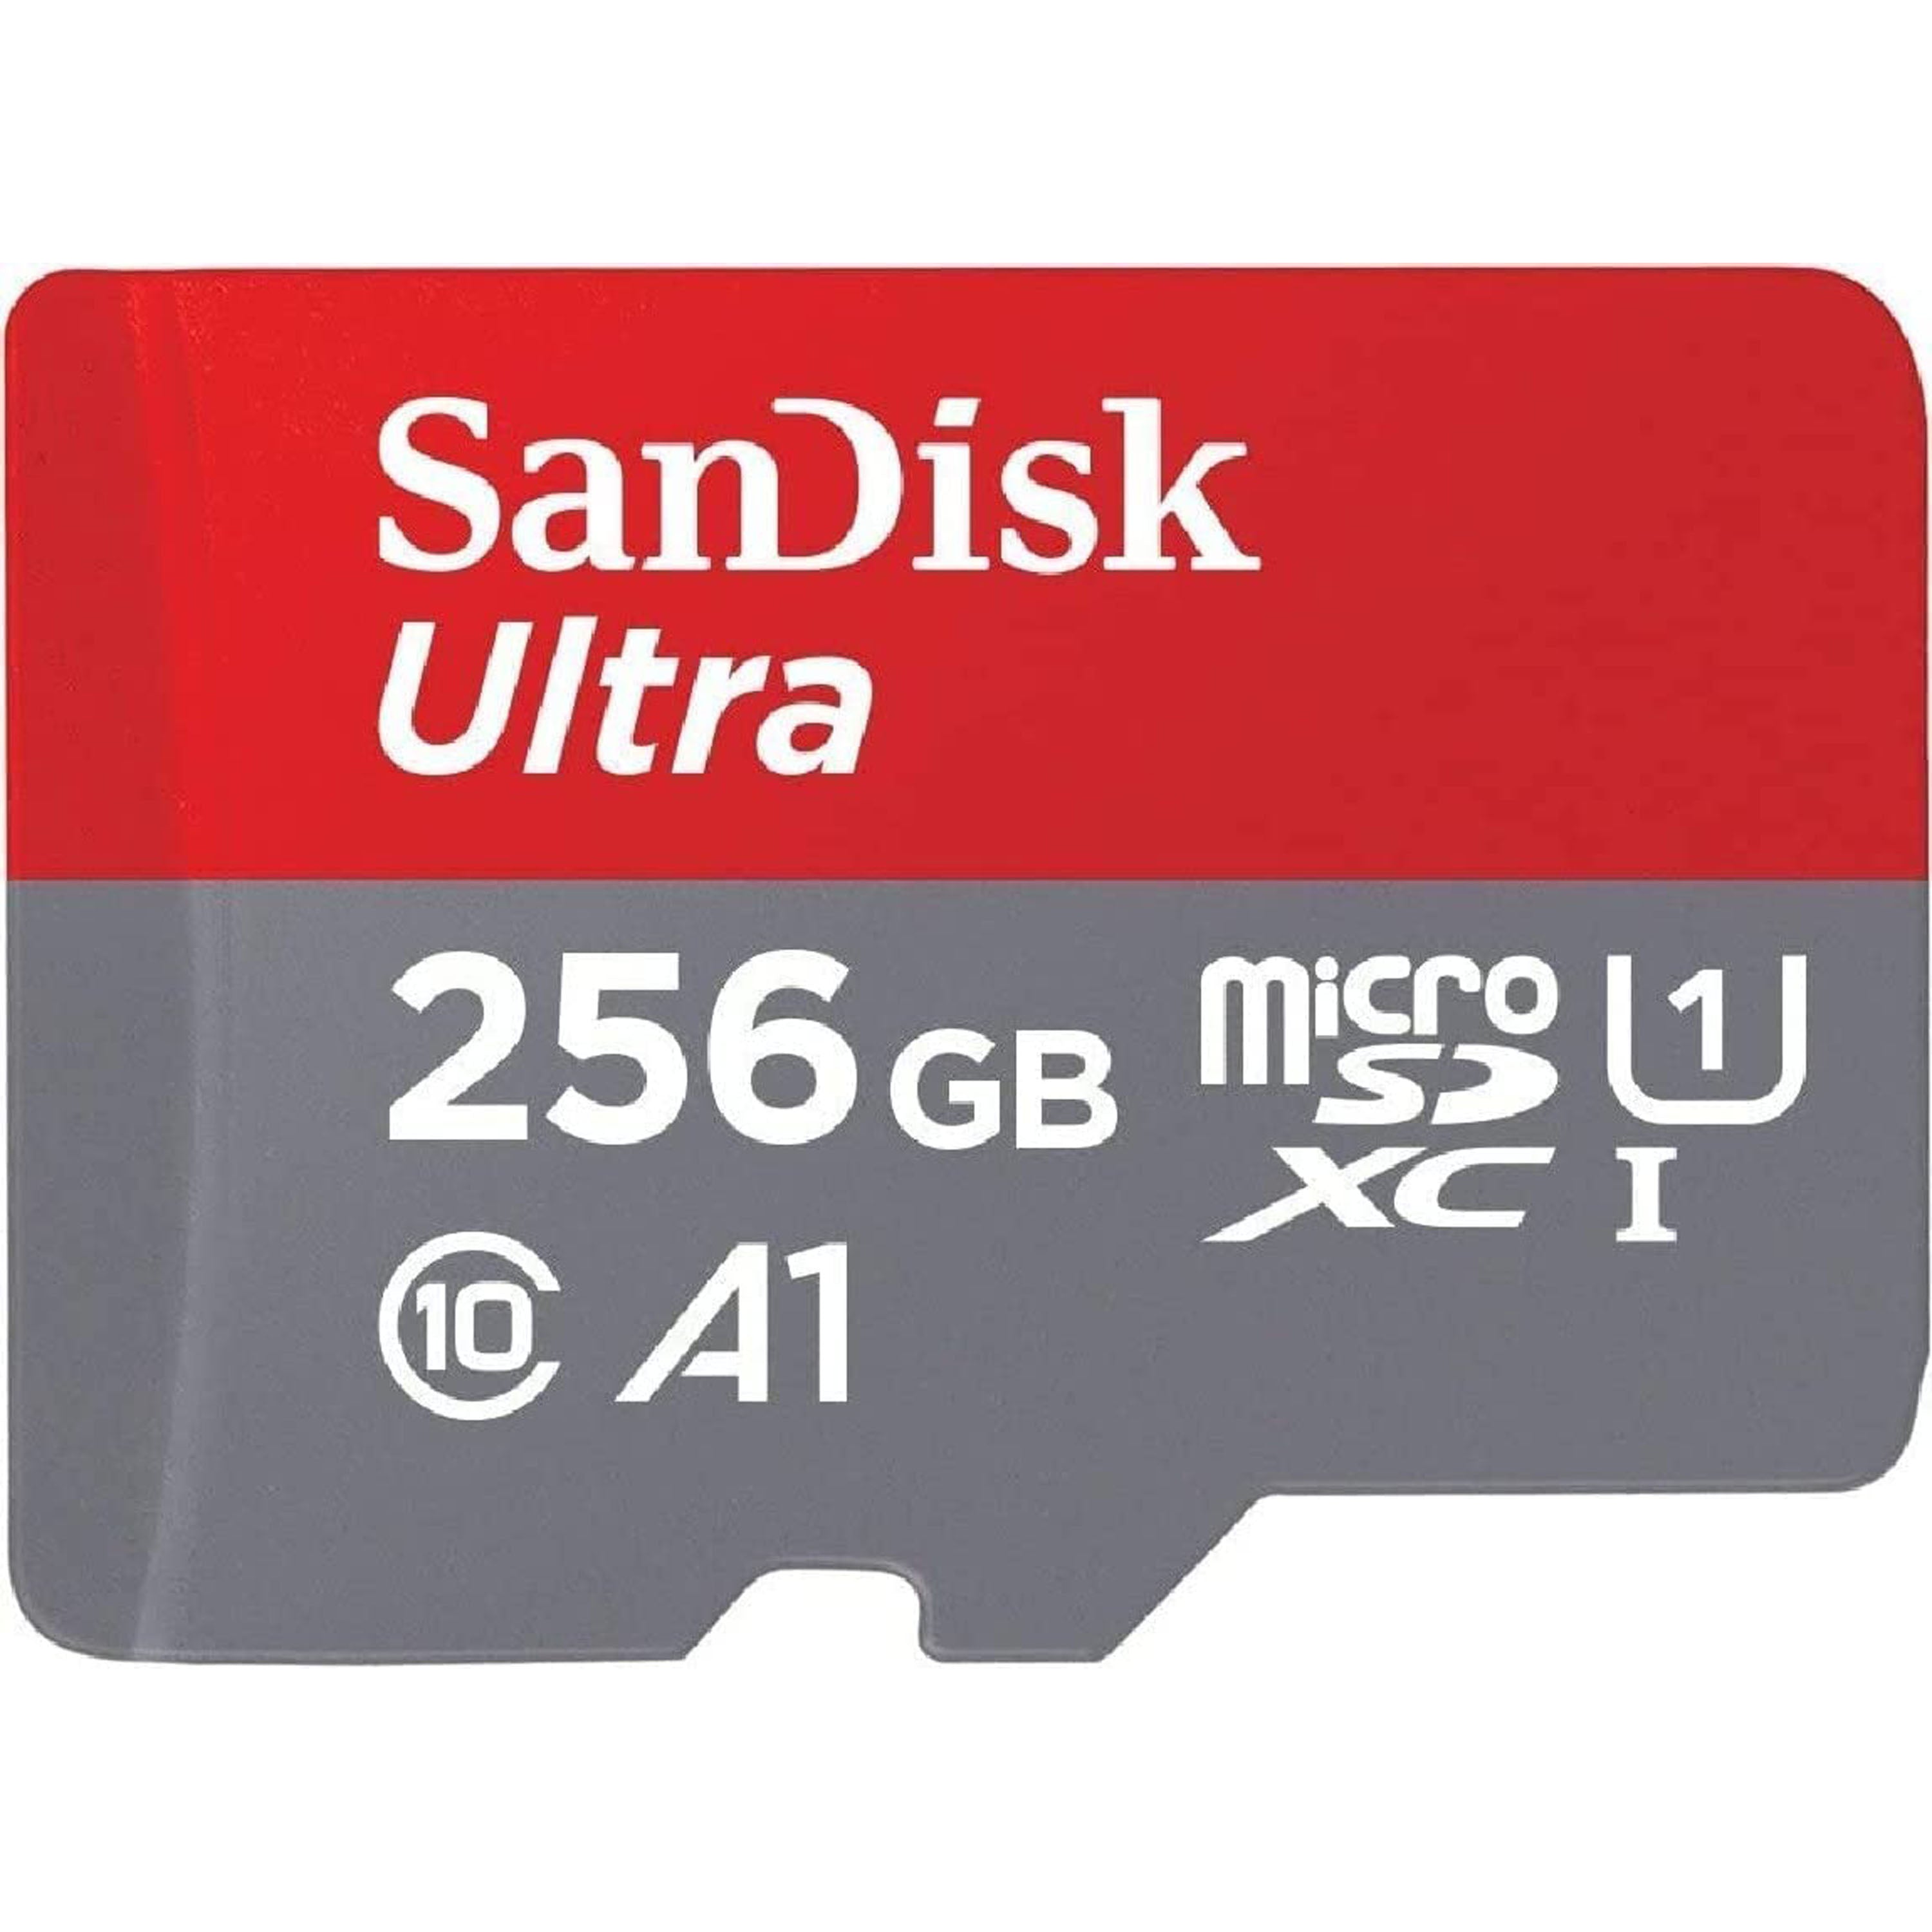 Sandisk Ultra MicroSDXC 256GB 120MB/s UHS-I